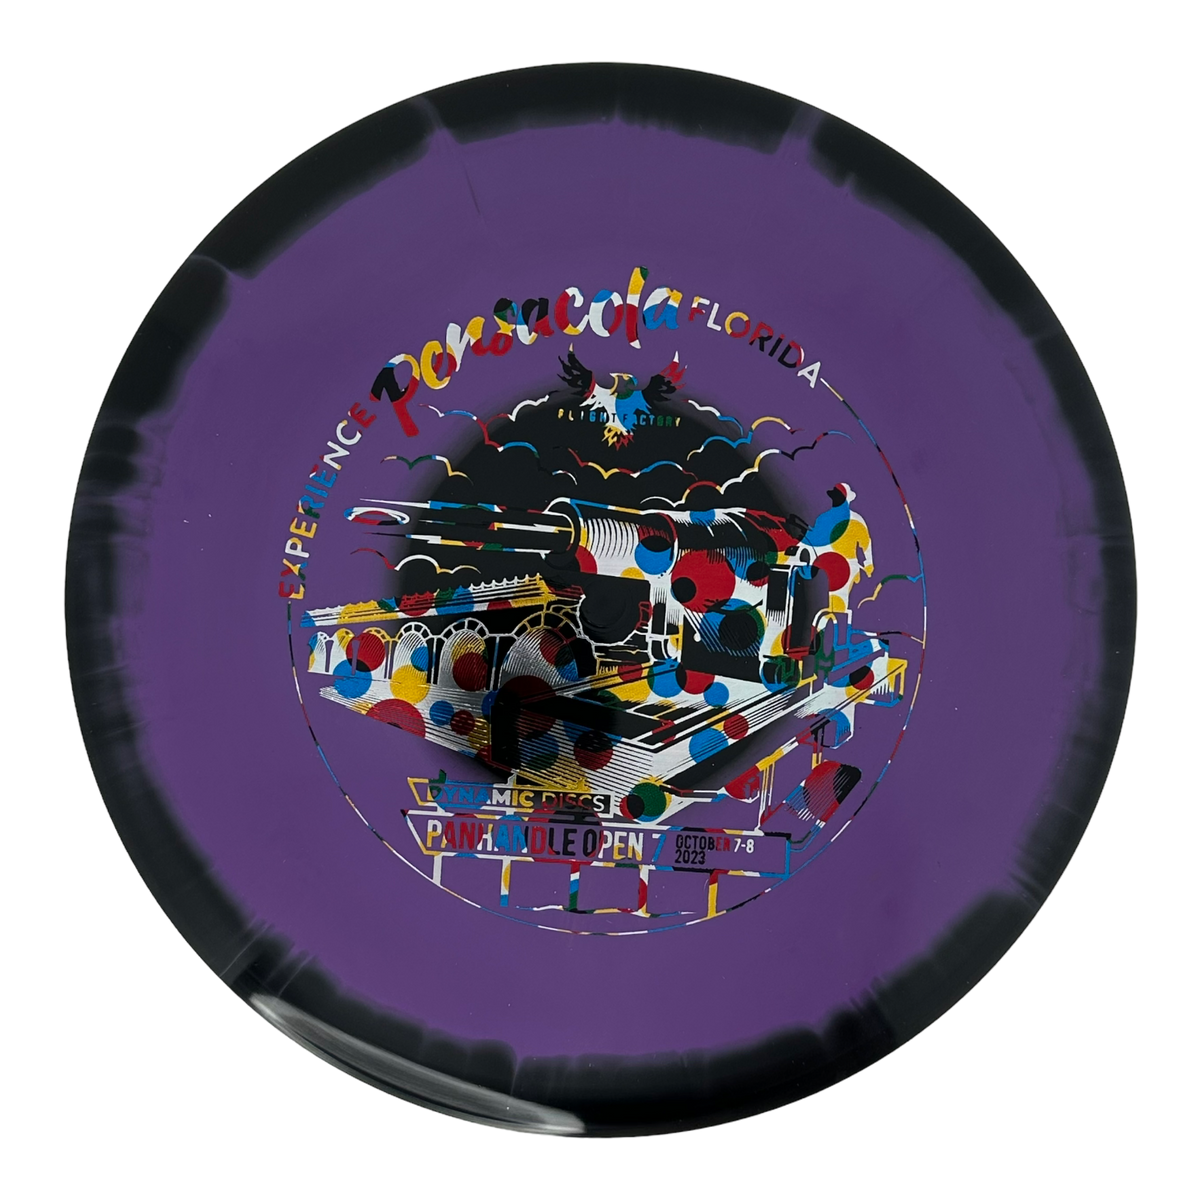 Dynamic Discs Fuzion Orbit EMAC Truth - Panhandle Open 7